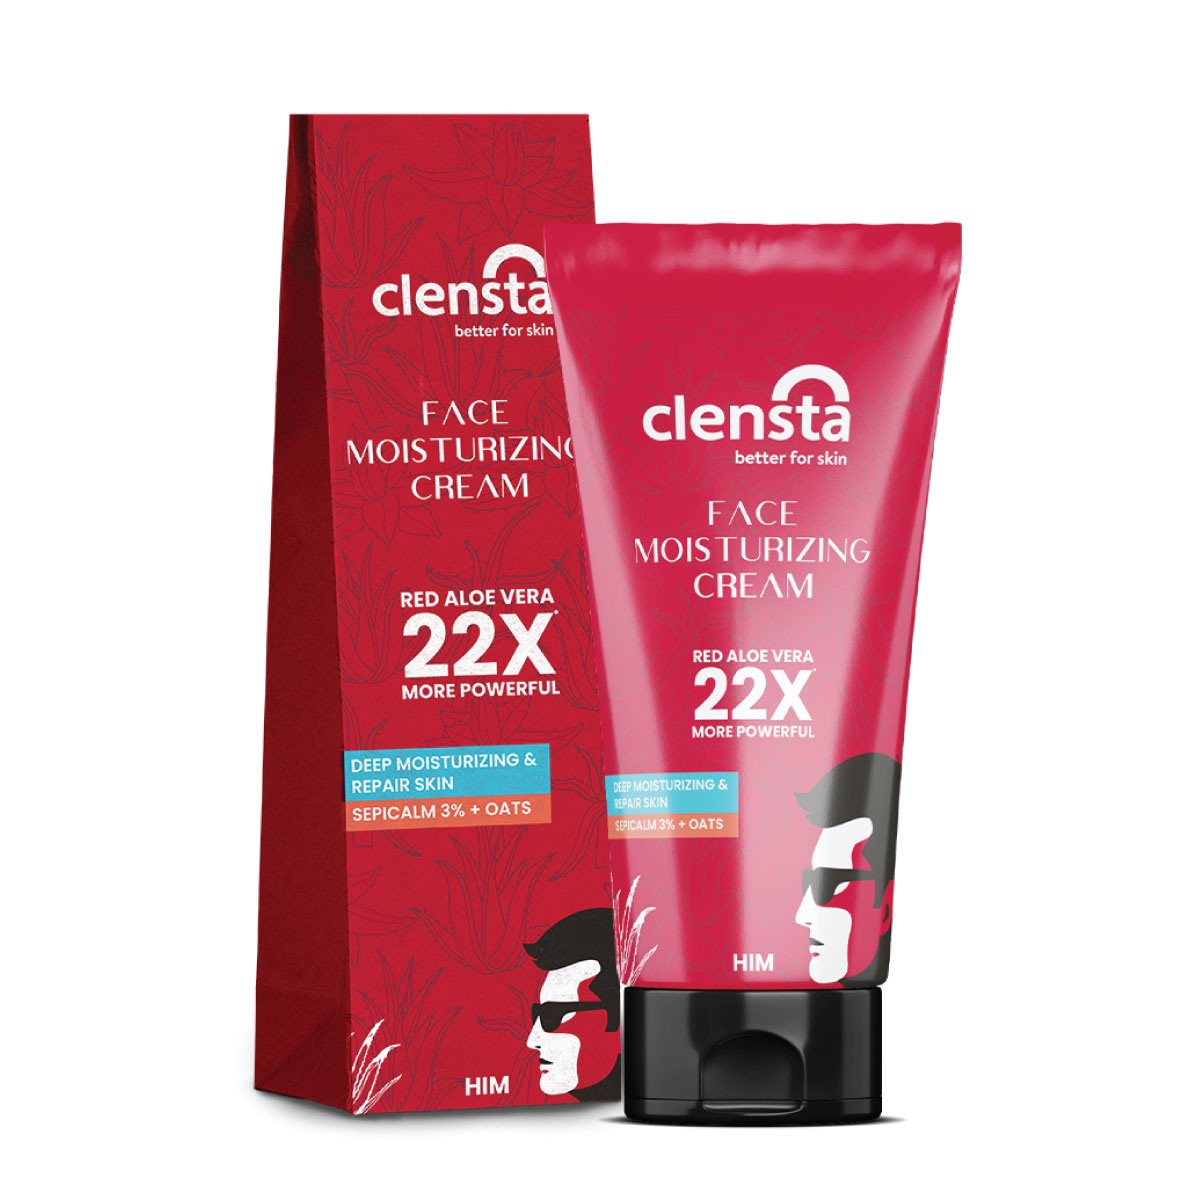 Clensta Face Moisturizing Cream for men